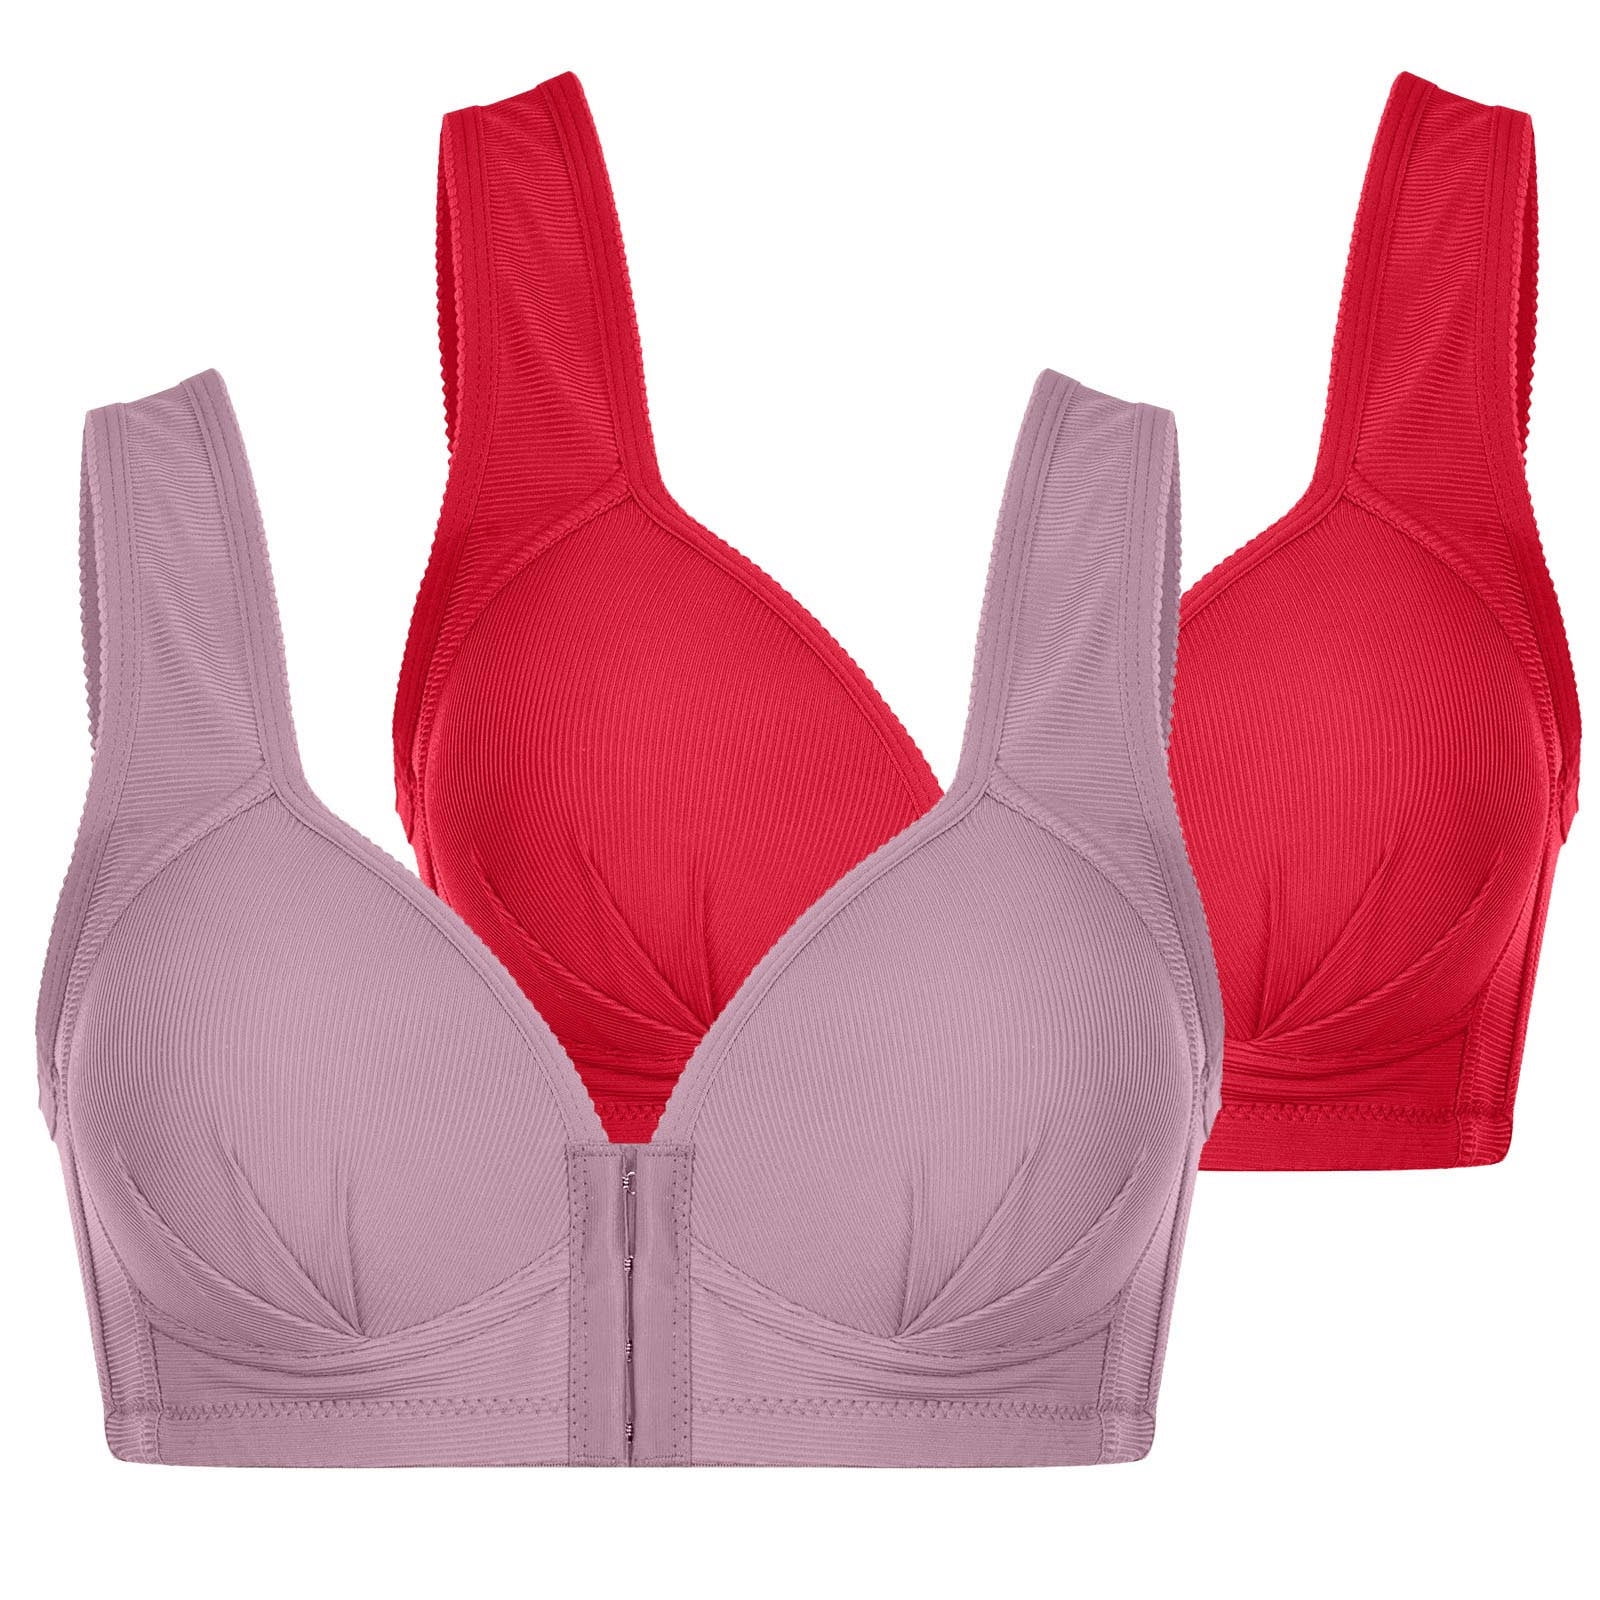 CHGBMOK Push Up Bras for Women Plus Size Floral Lace Wireless Bra Underwear  Set 2Pcs